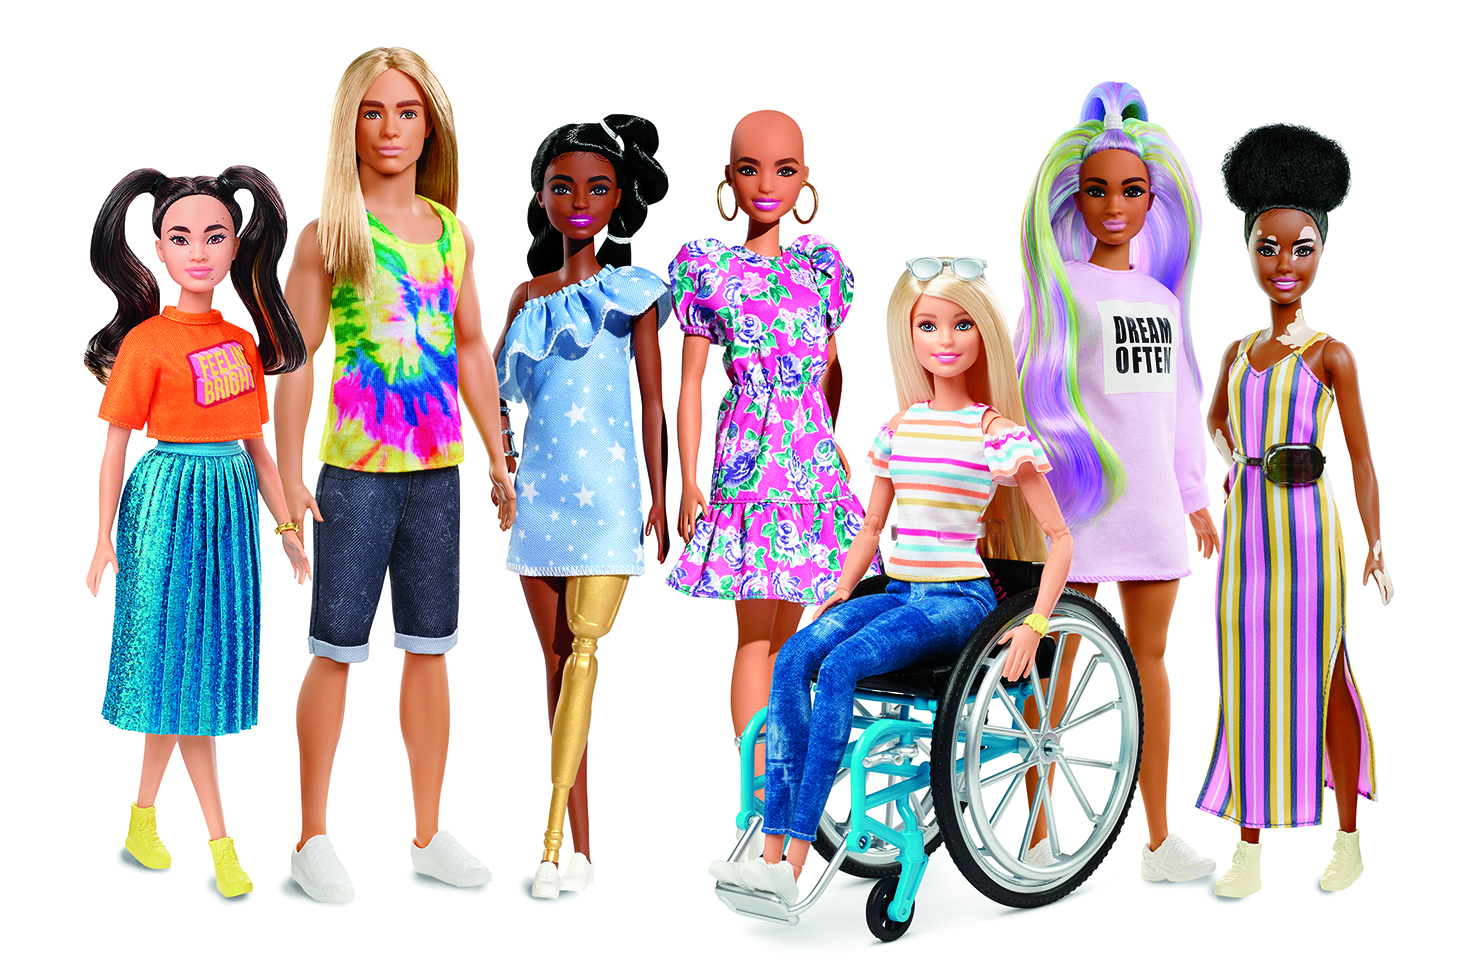 Barbie fashionista line of dolls